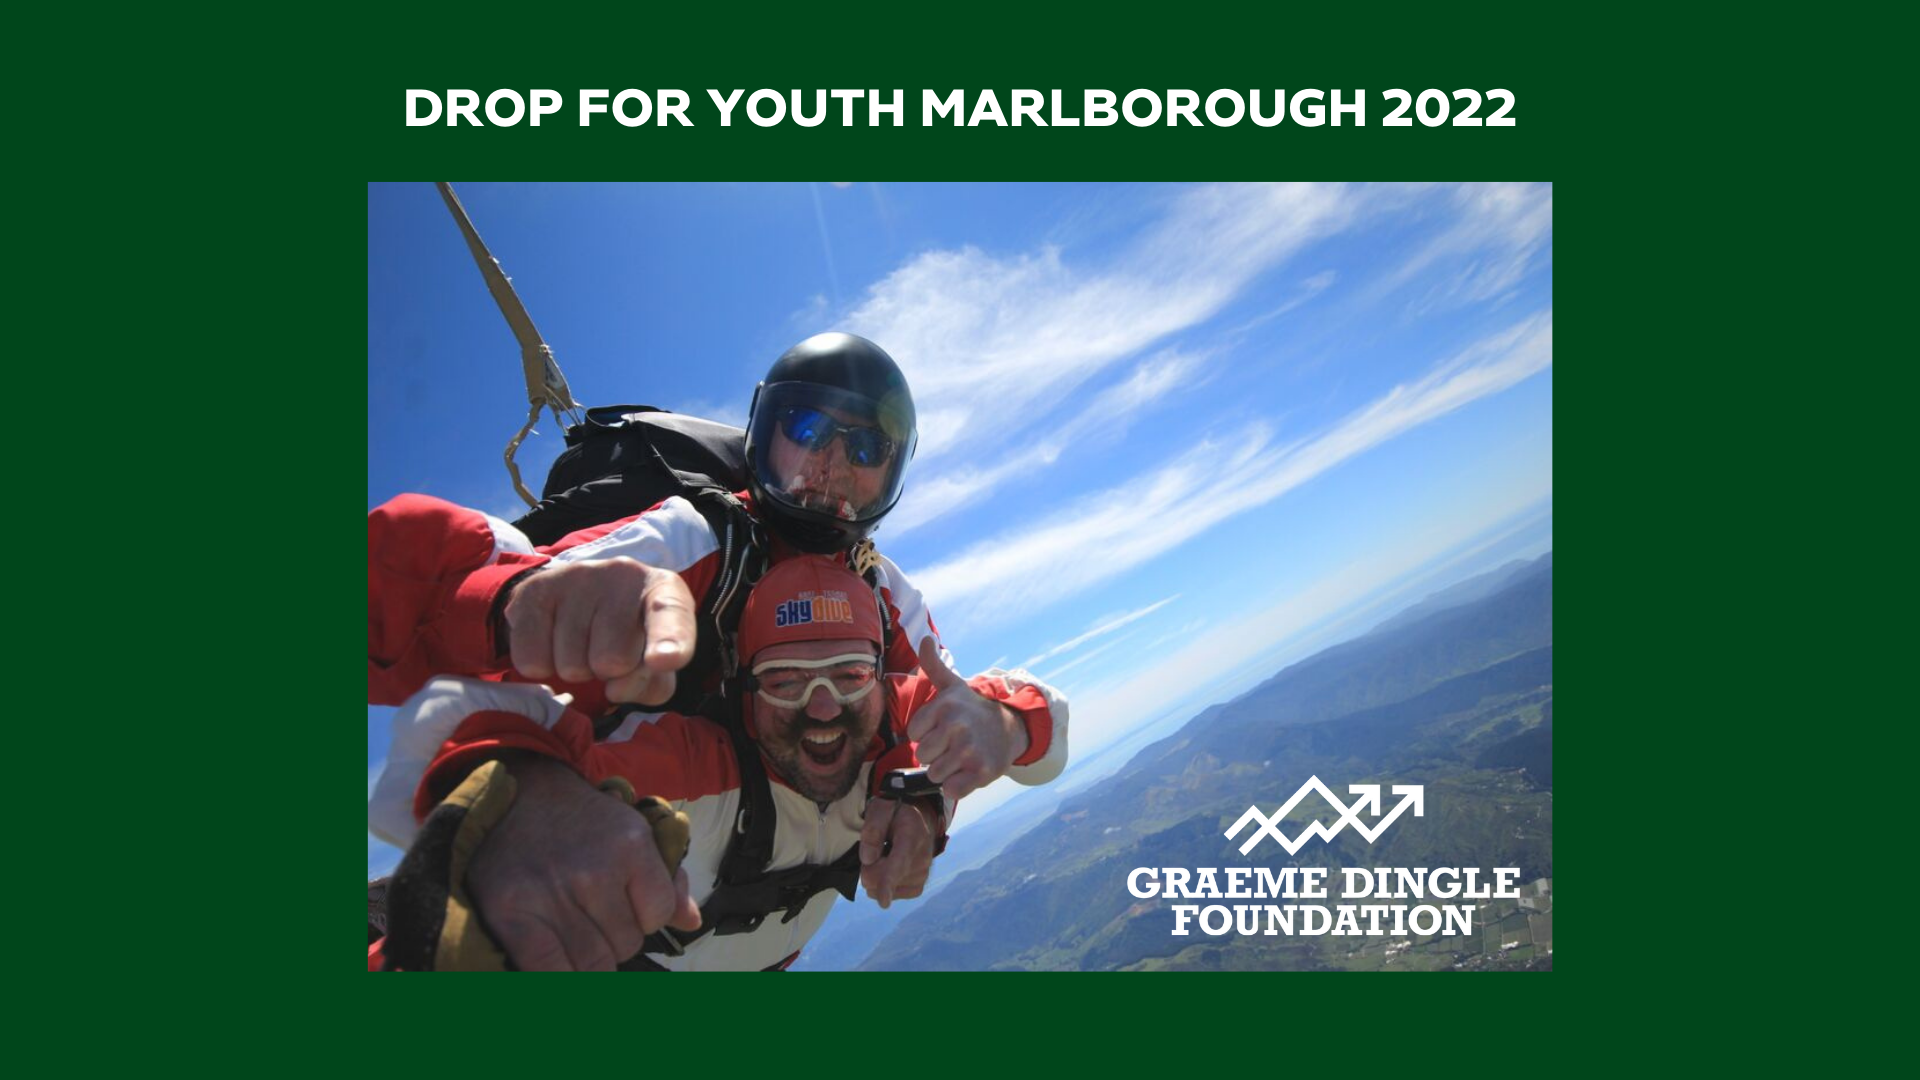 Drop for Youth Marlborough 2022 